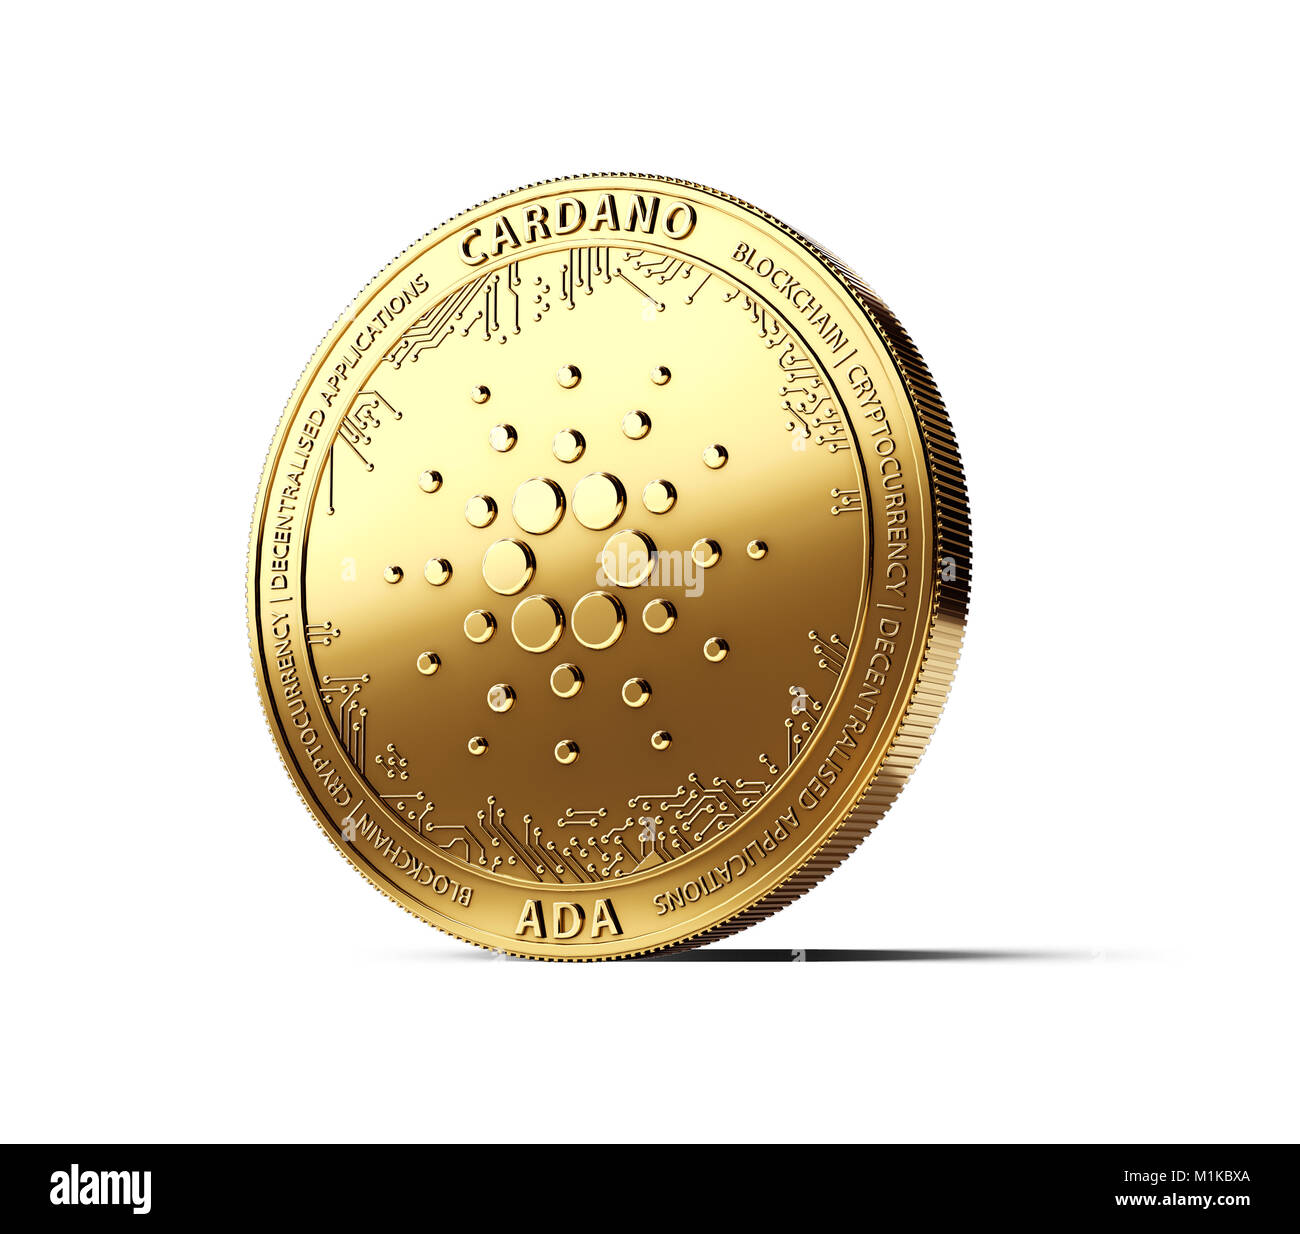 Cardano Coin Wallpaper / Crypto Price Analysis Overview ...